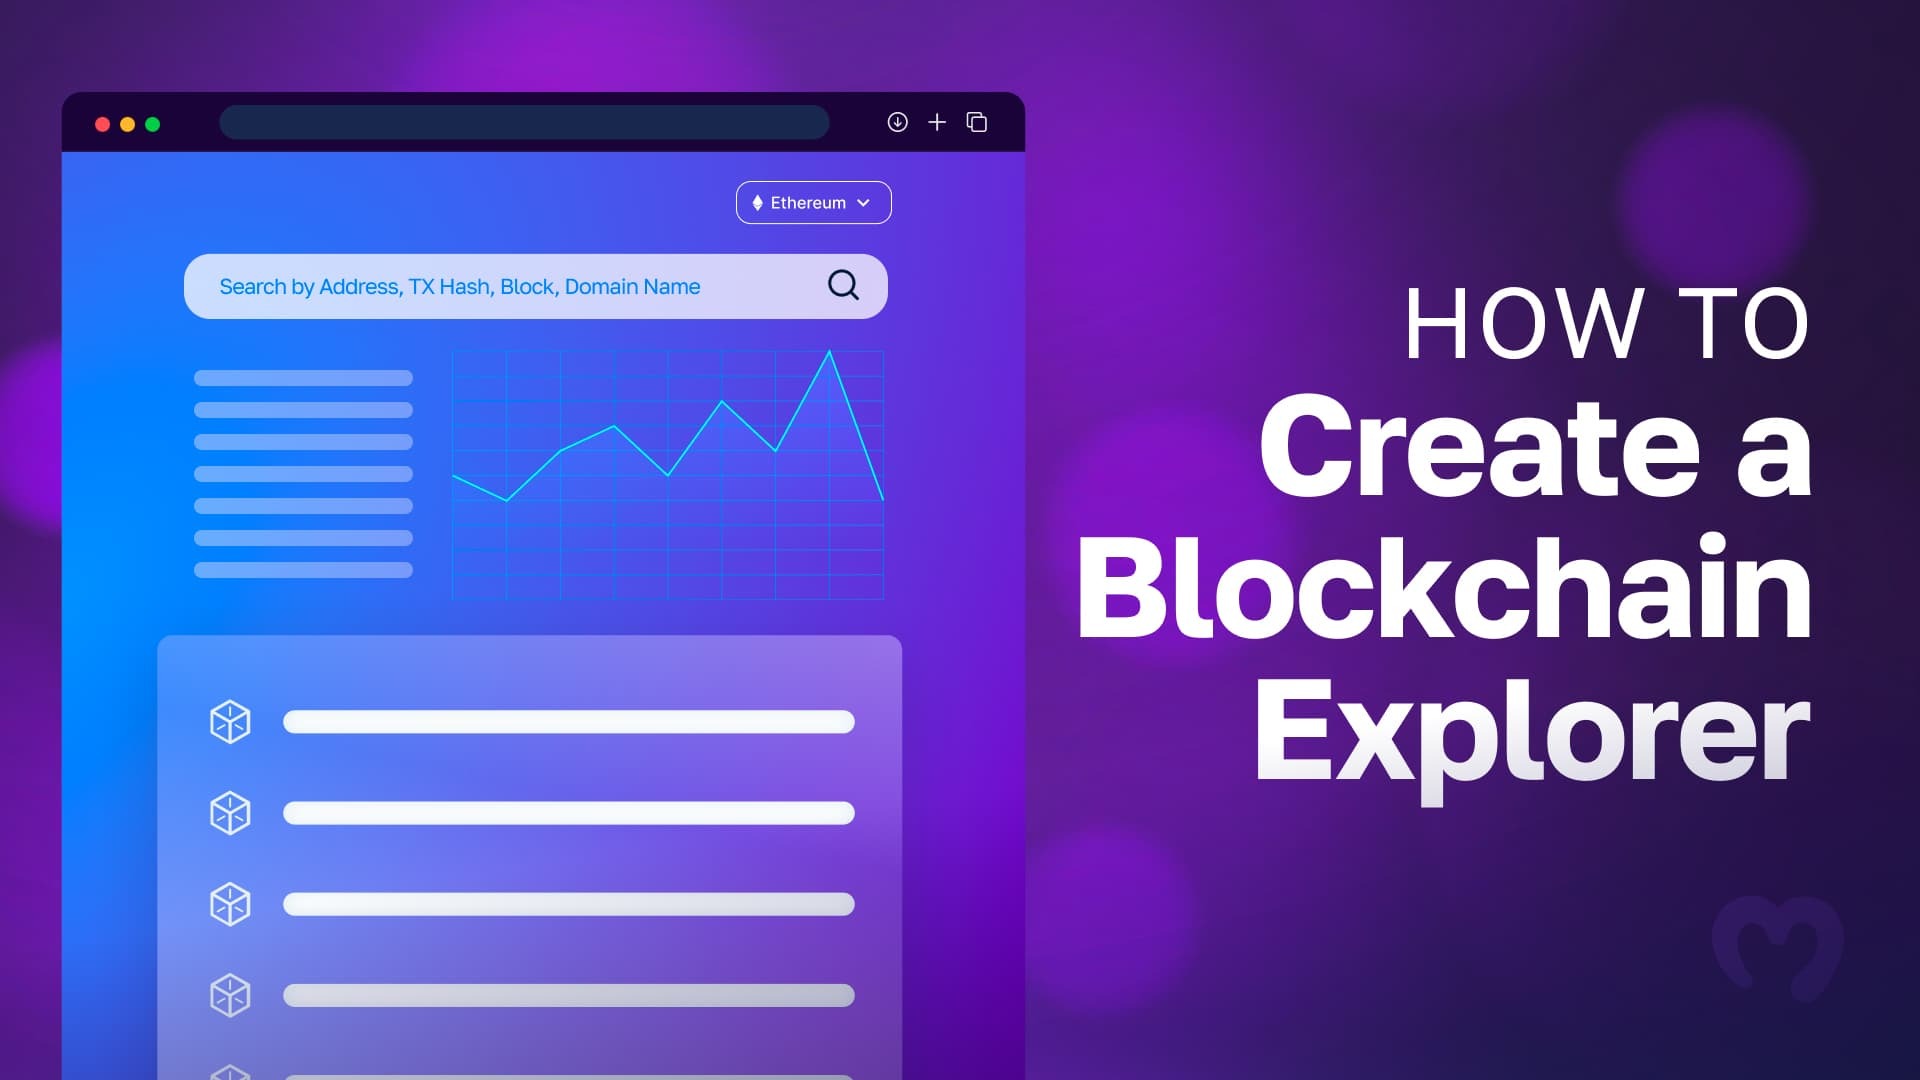 How to Create a Blockchain Explorer